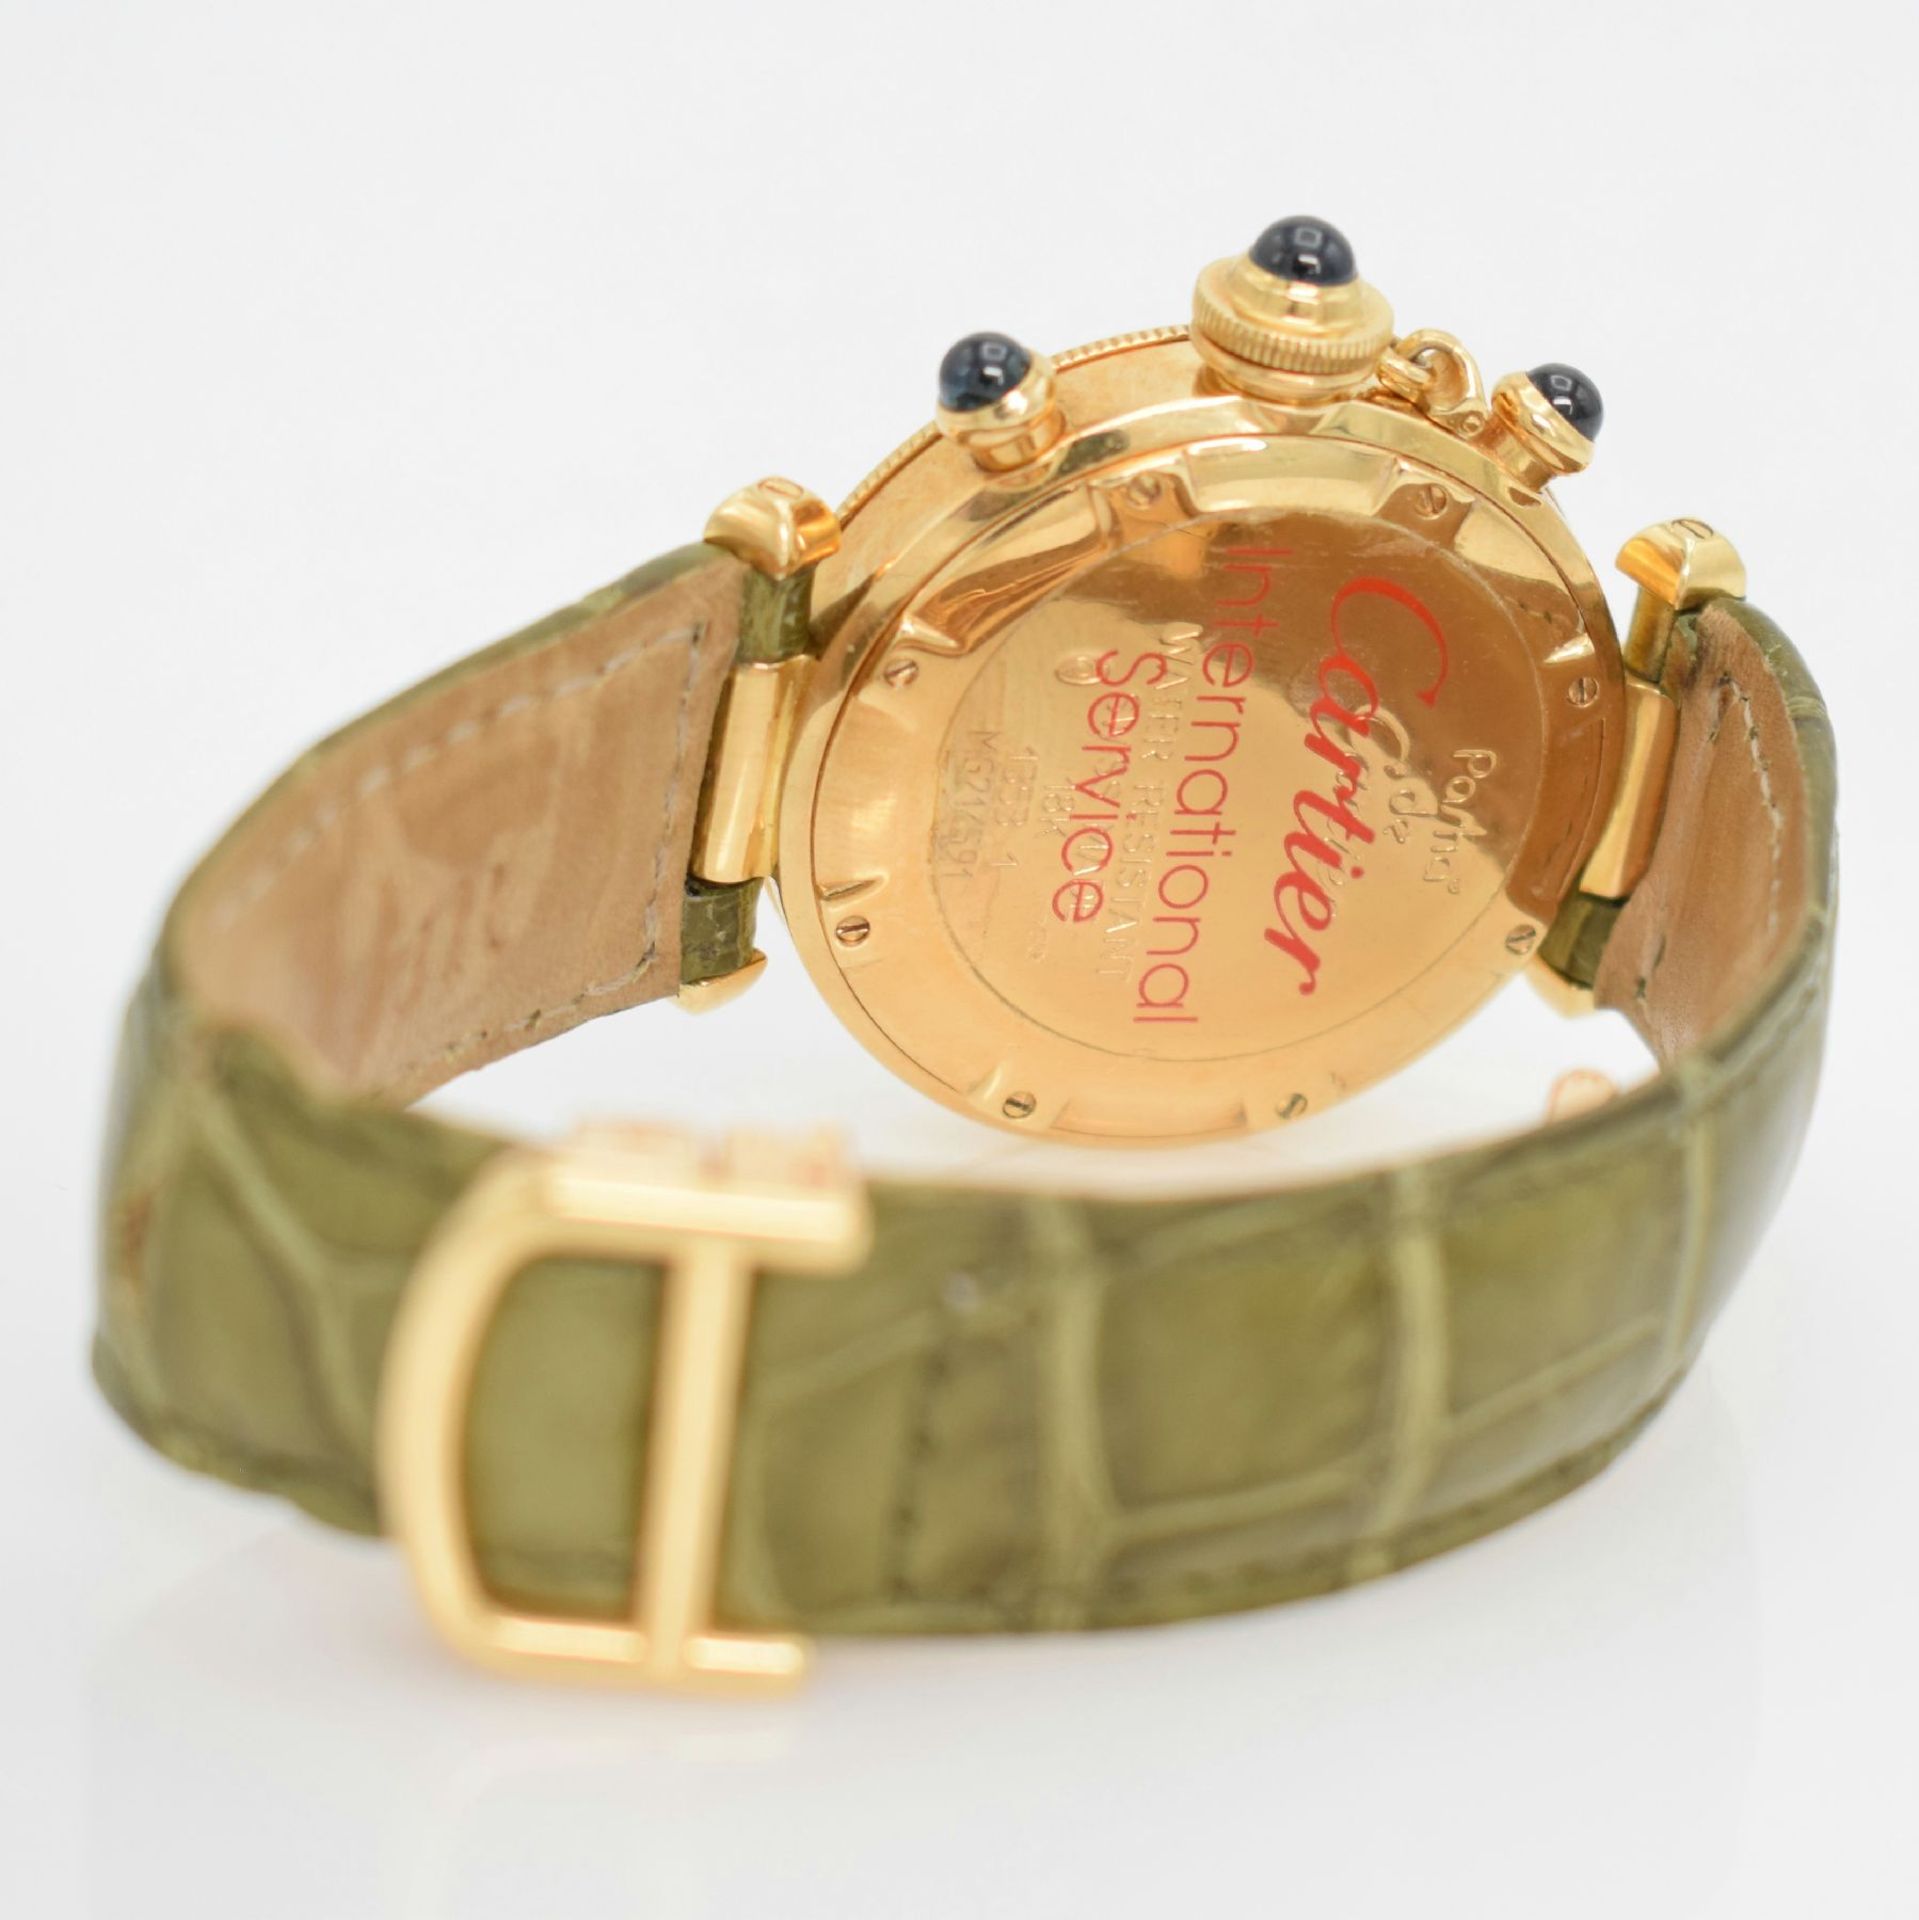 CARTIER Armbandchronograph Serie Pasha in GG 750/000, Schweiz um 2000, Ref. 1353.1, quarz, - Bild 6 aus 9